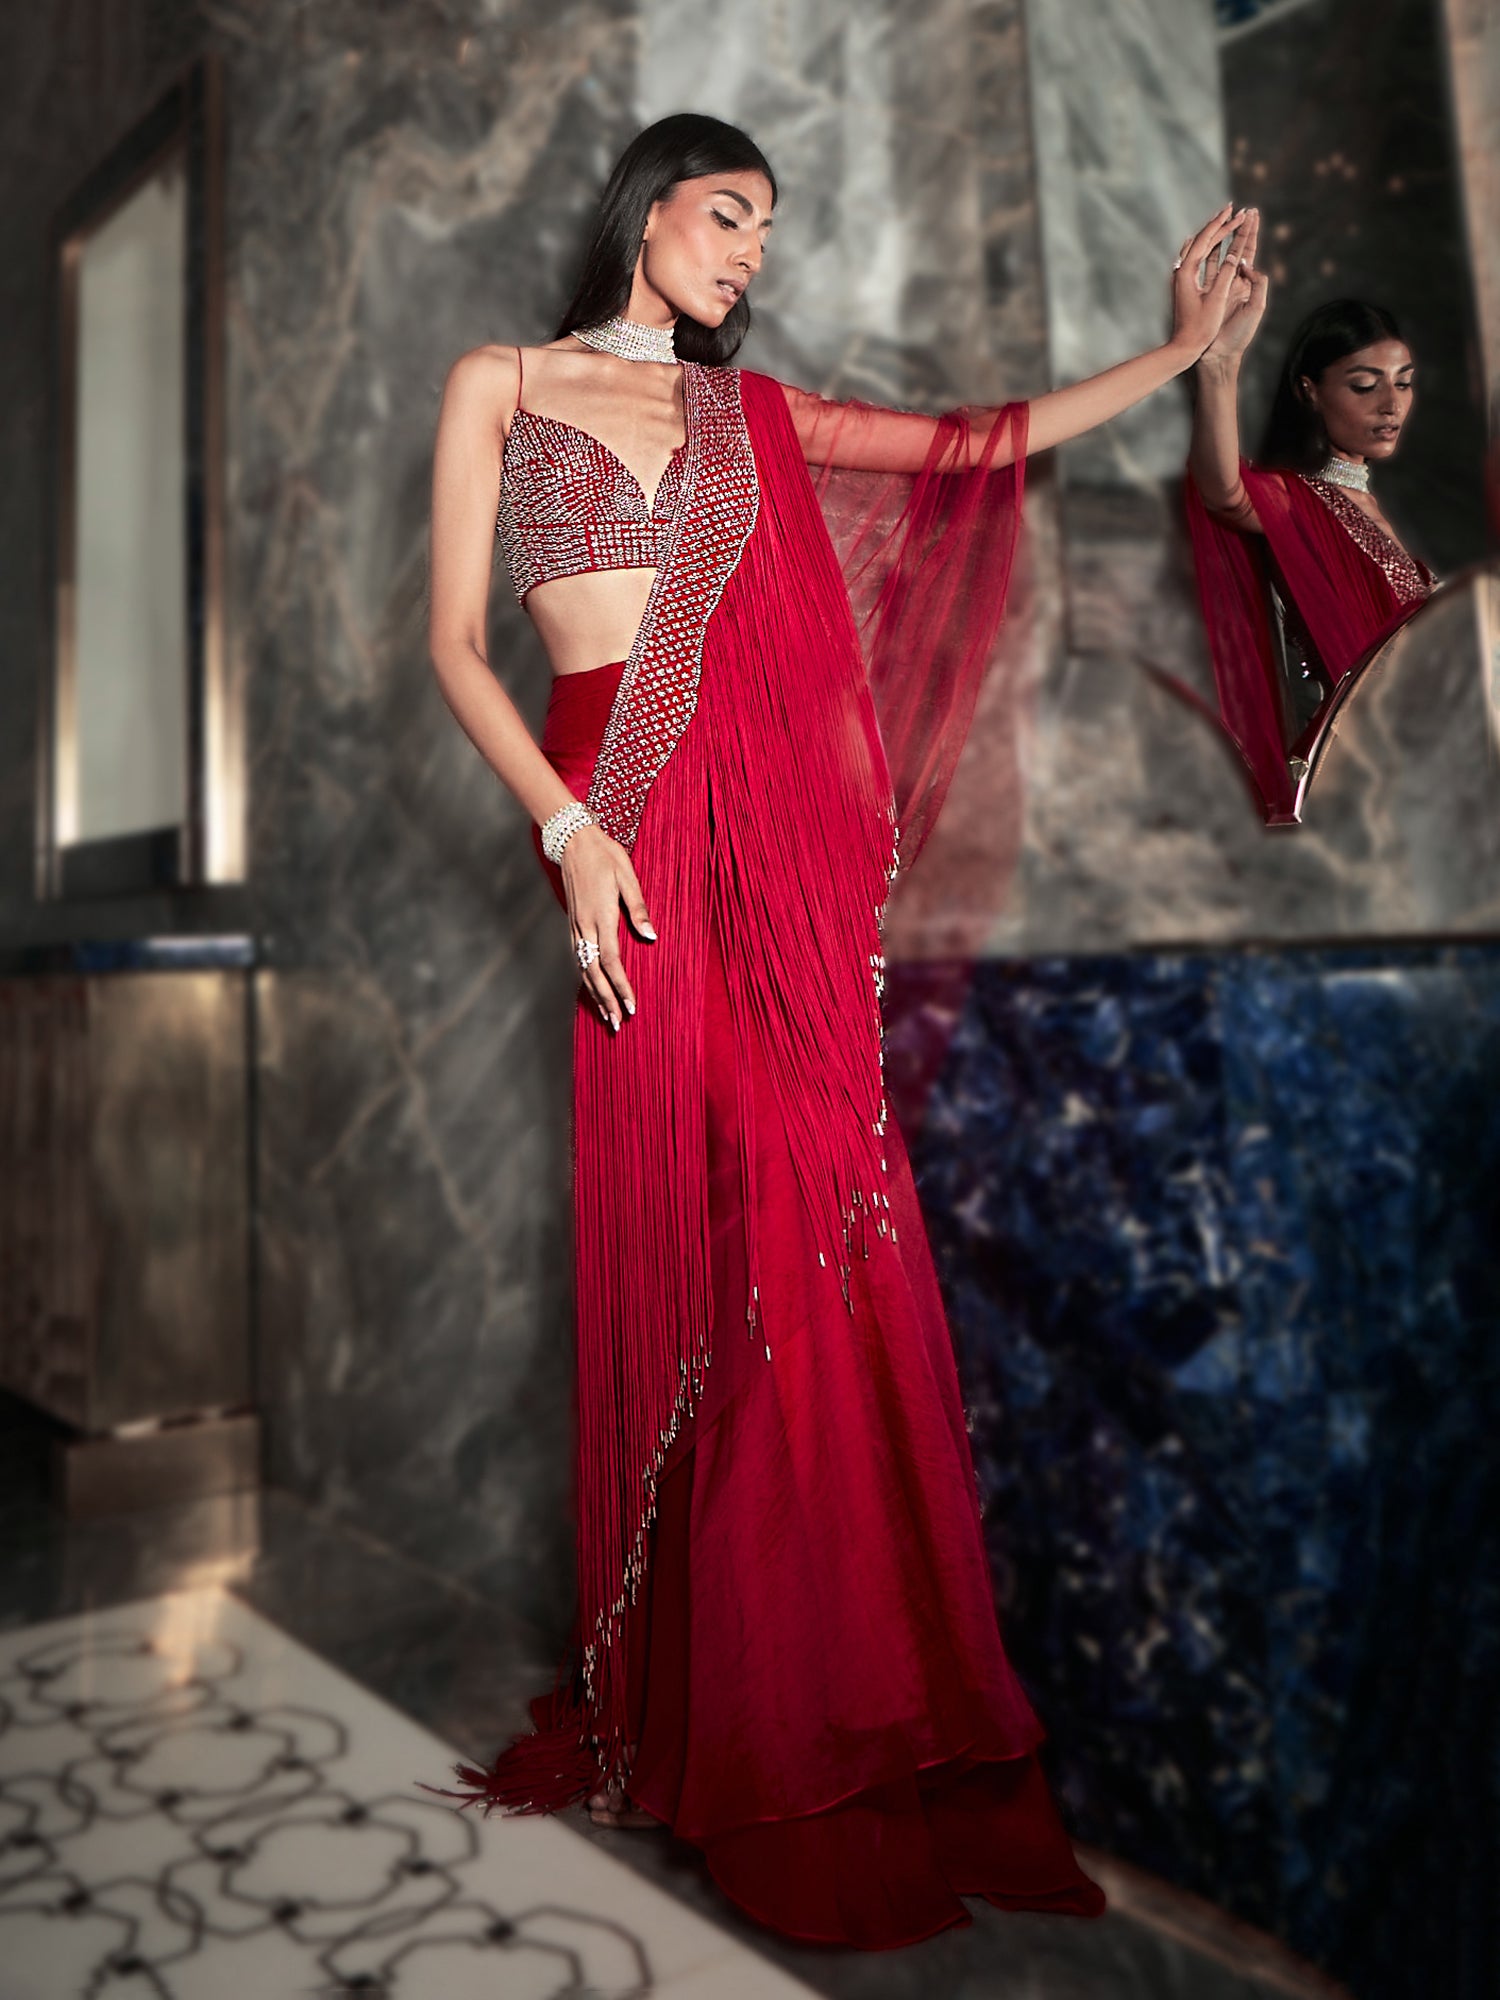 Ready To Wear Lehenga Saree Bollywood Wedding Party Designer Sari | eBay